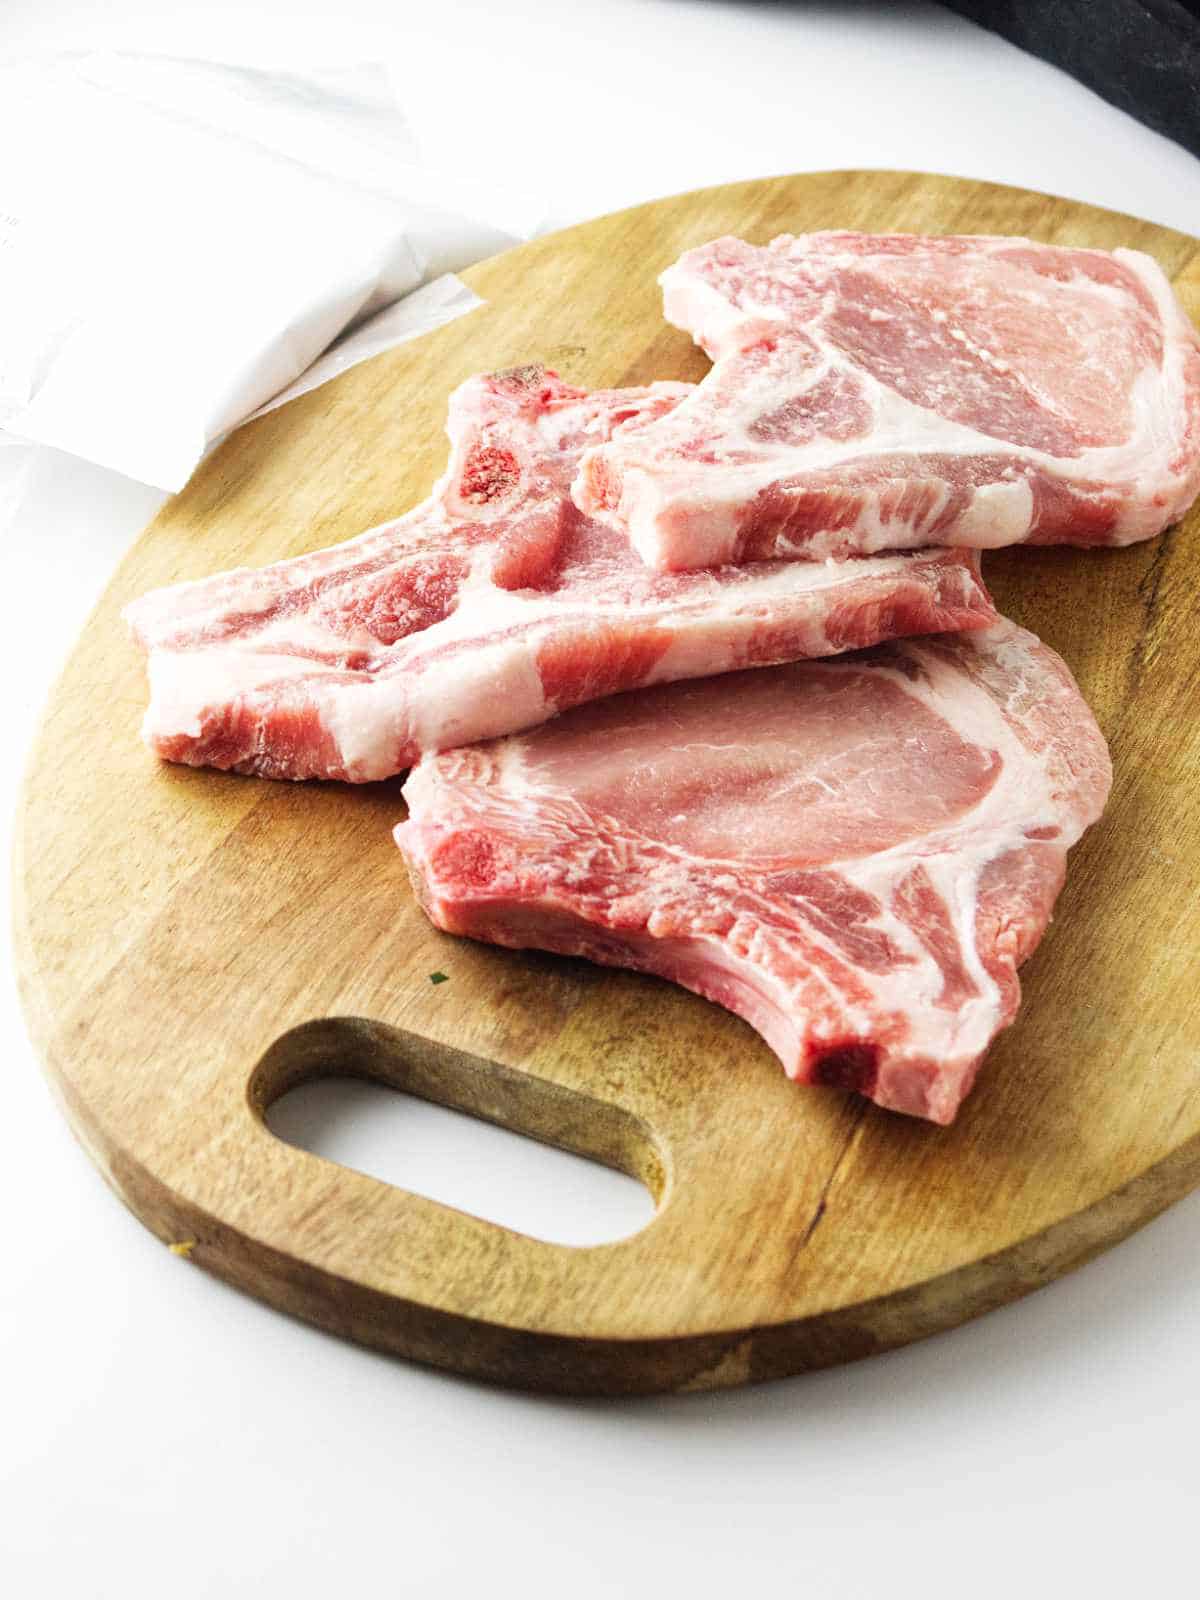 seasoning raw pork chops.